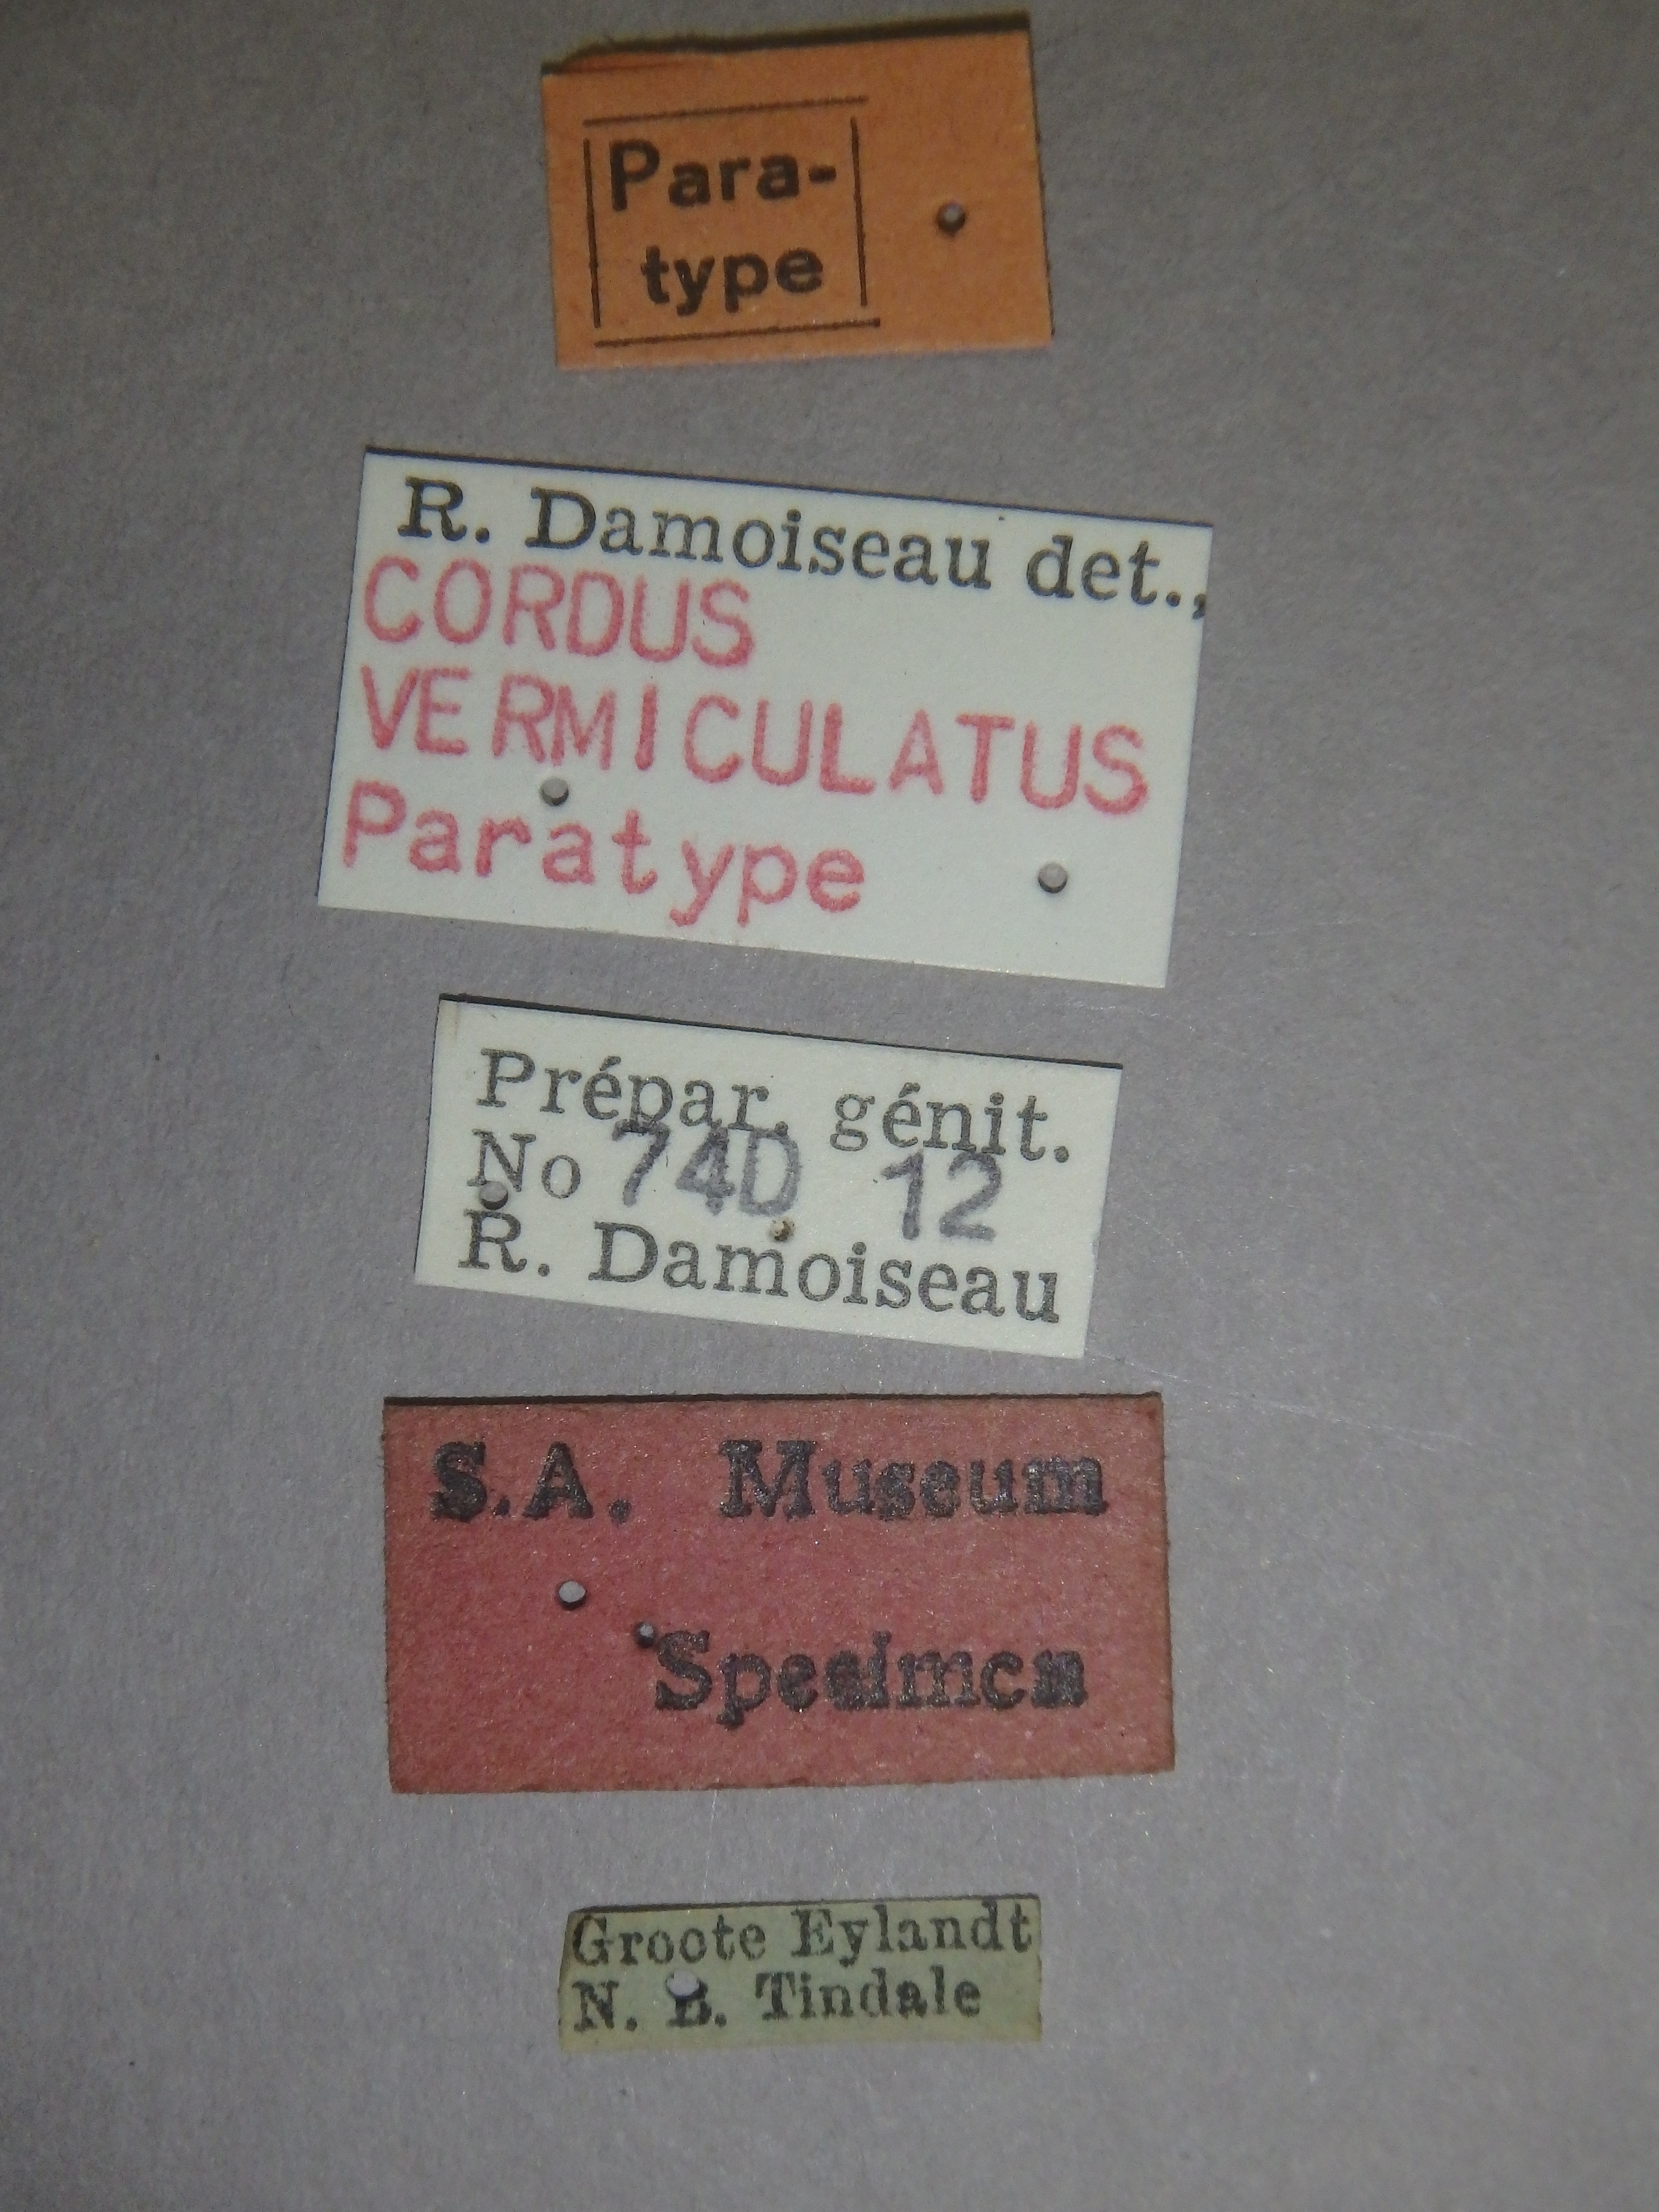 Cordus vermiculatus pt Labels.jpg